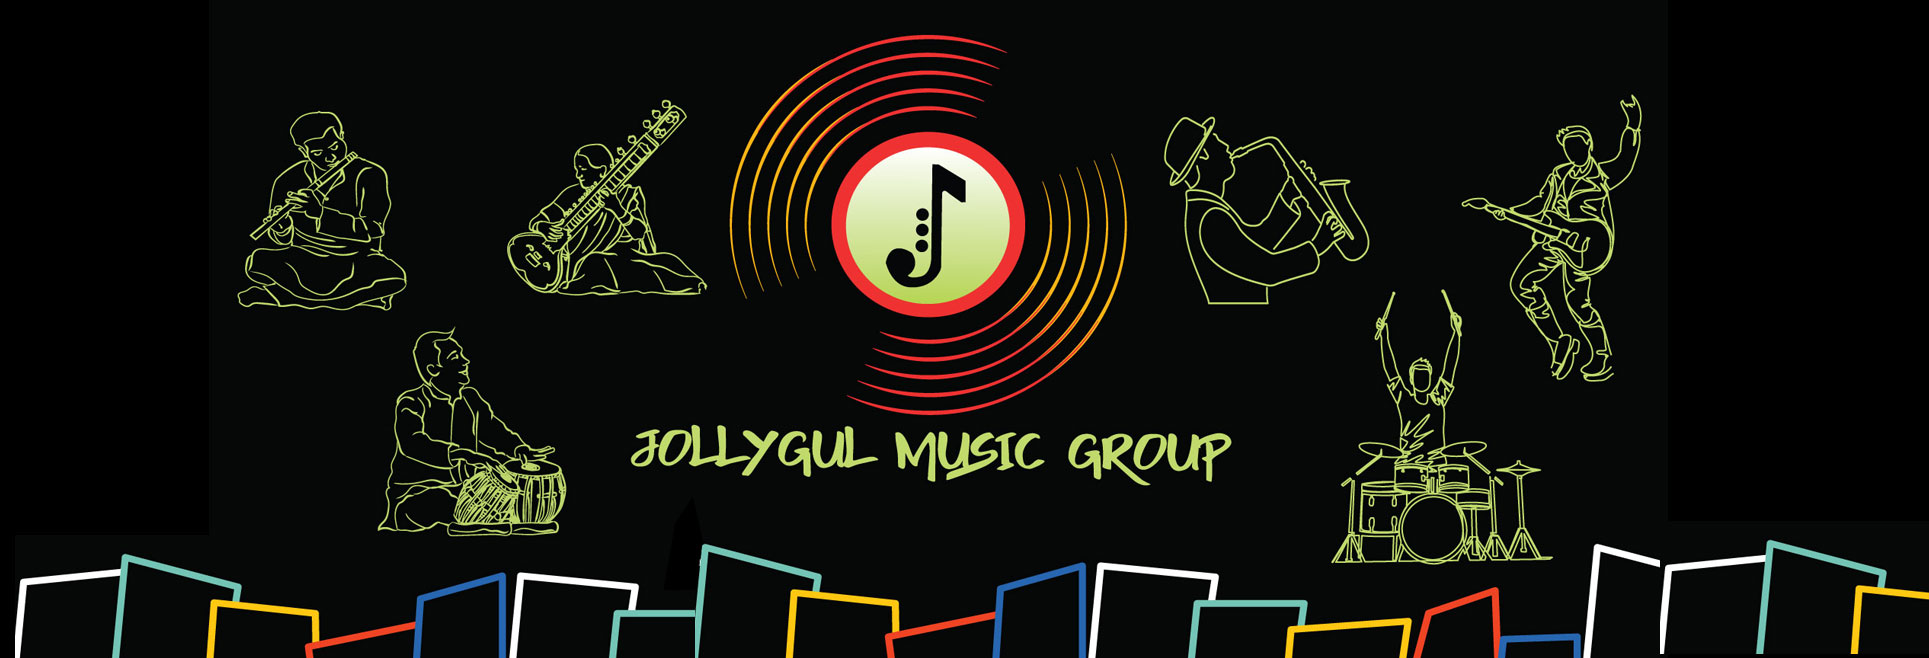 JollyGul Music Group